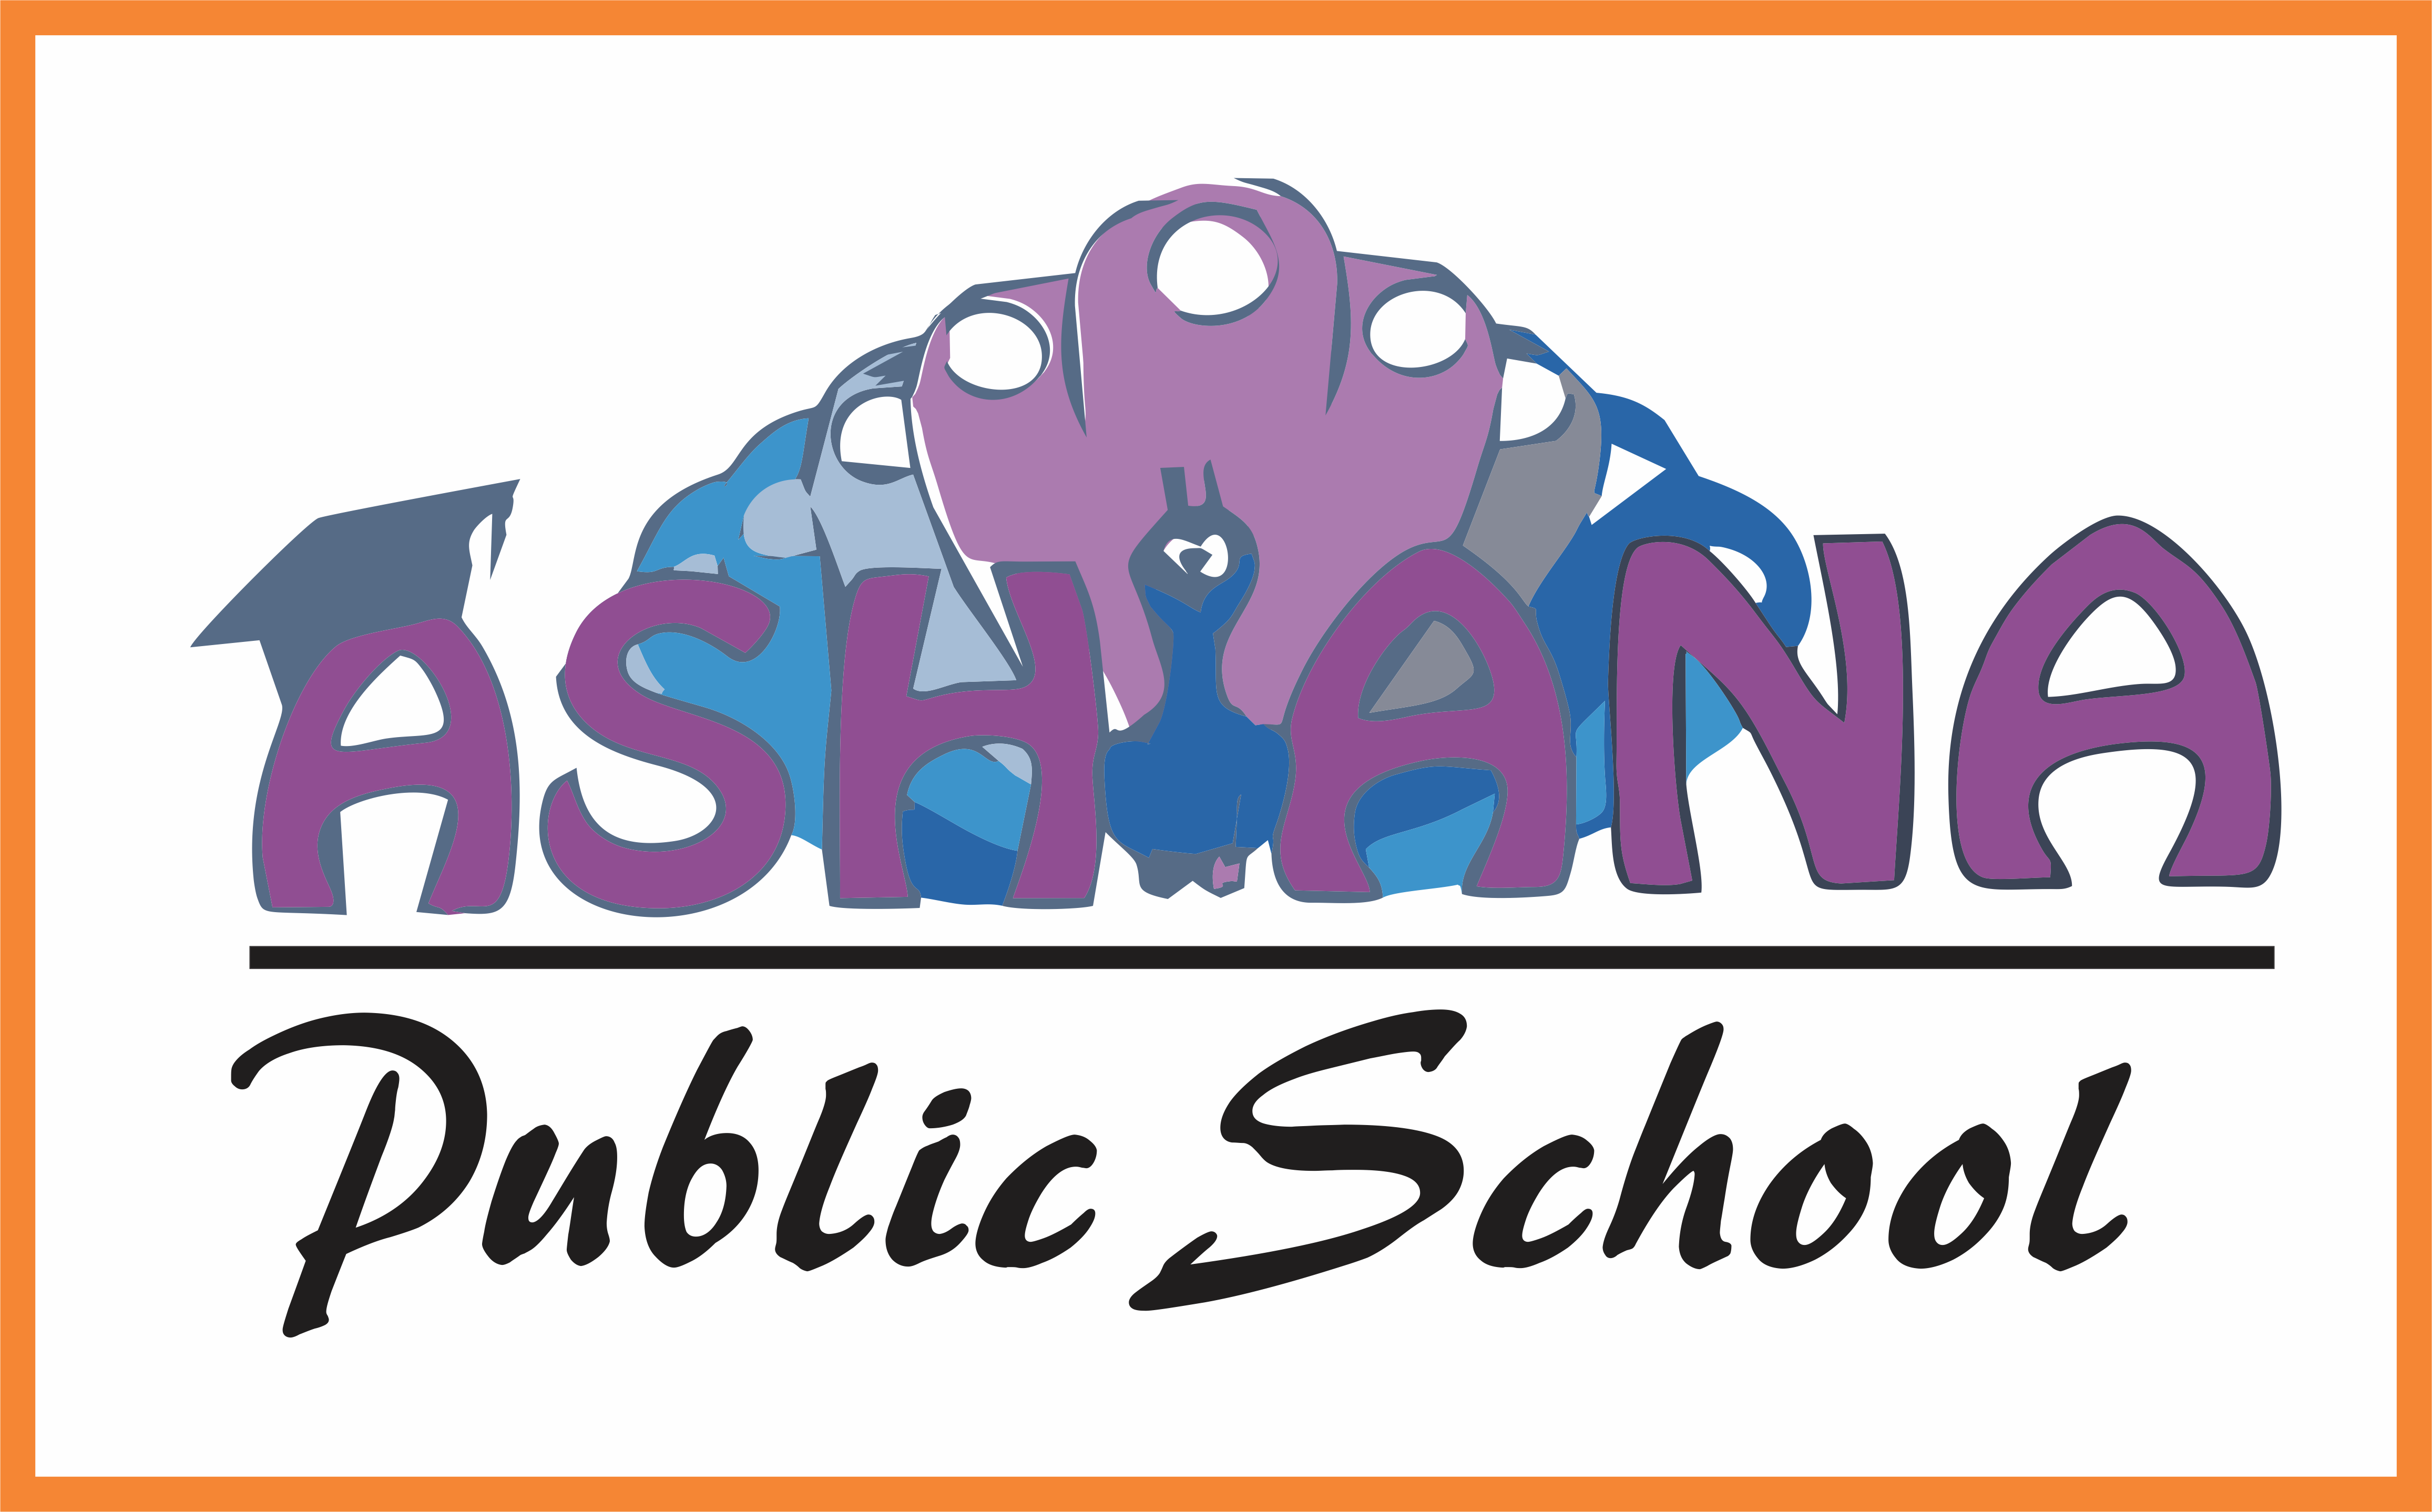 Ashiyana Public School|Schools|Education